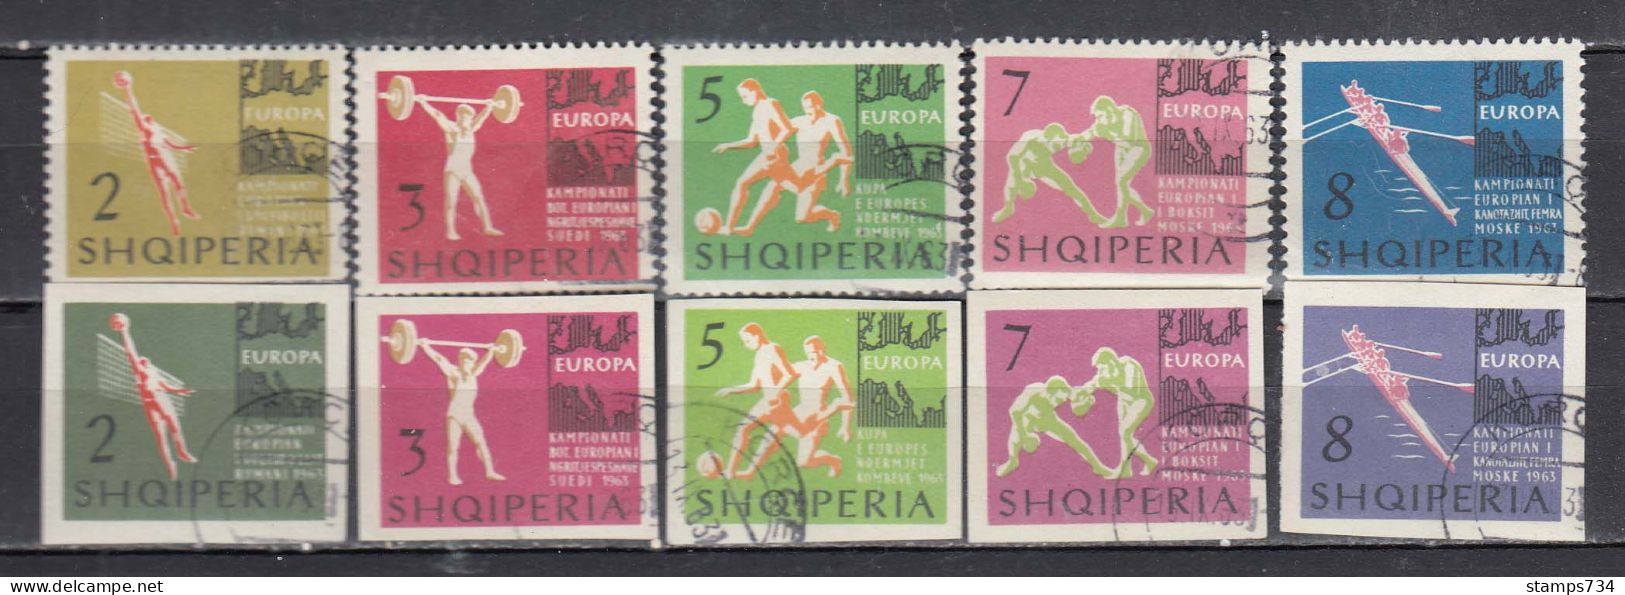 Albania 1963 - Sports: European Championships, Perf.+imperforated, Mi-Nr. 763/67+768/72, Used - Albania